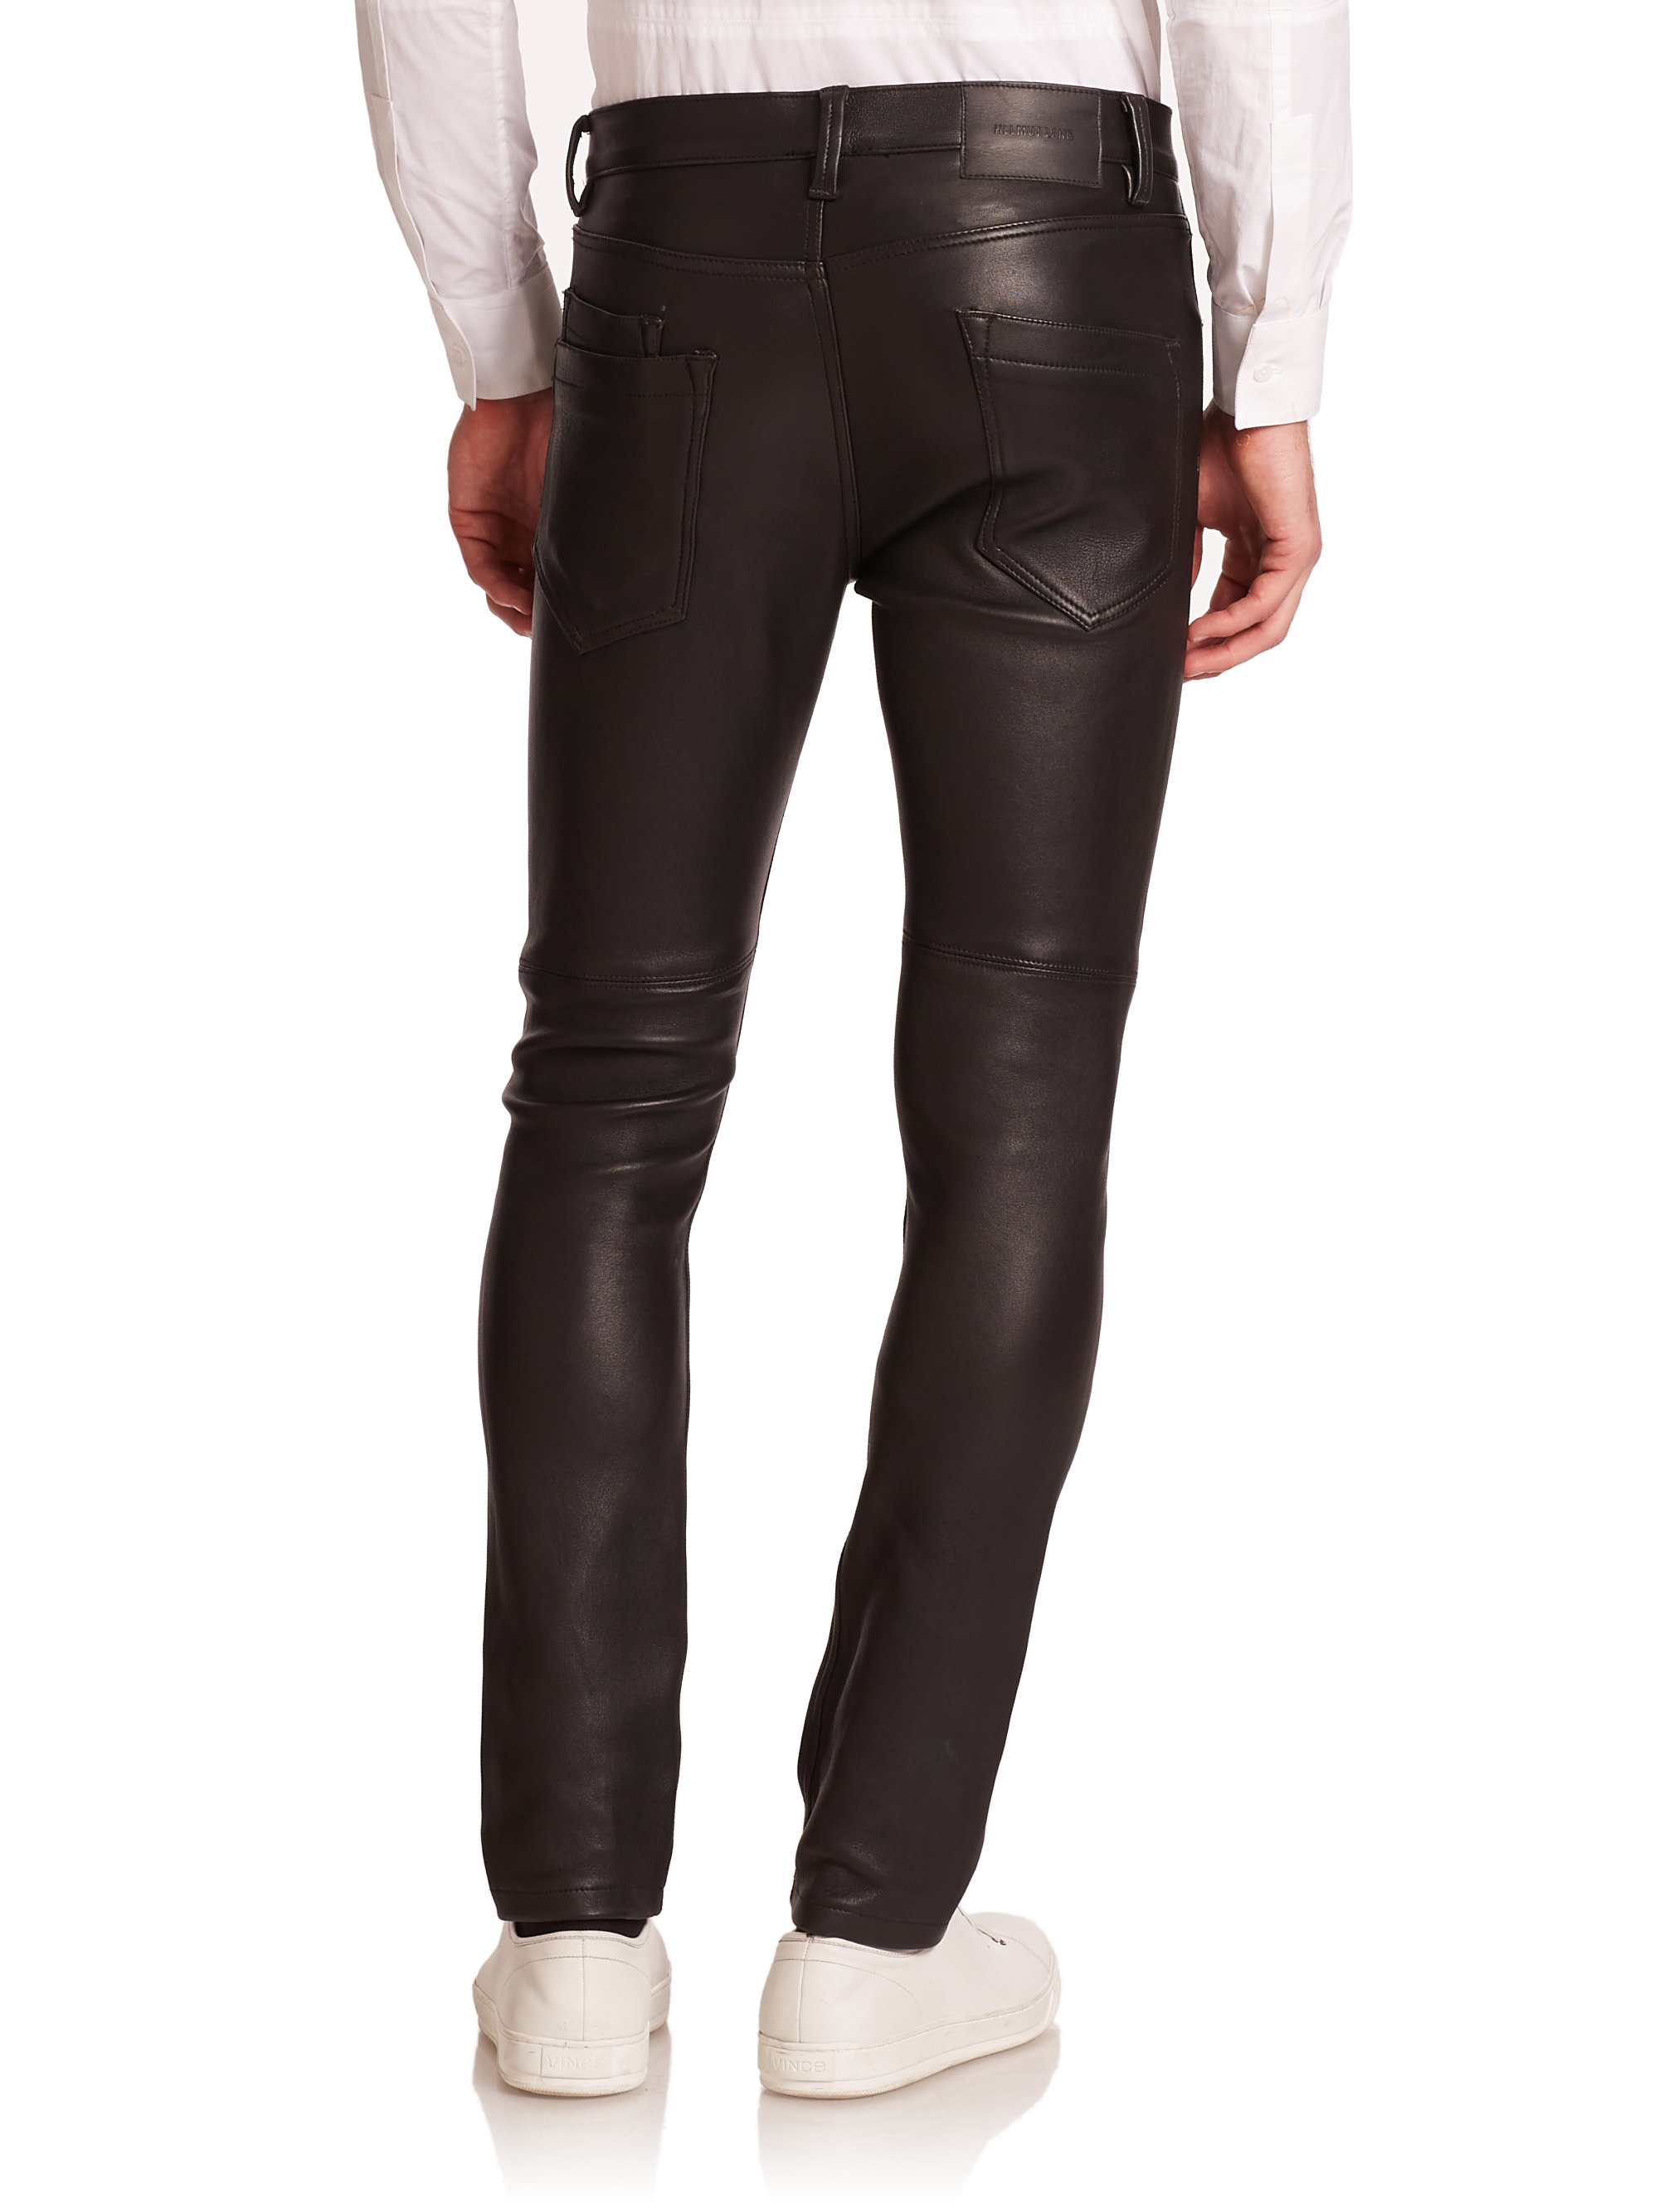 Lyst - Helmut Lang Skinny-fit Leather Pants in Black for Men